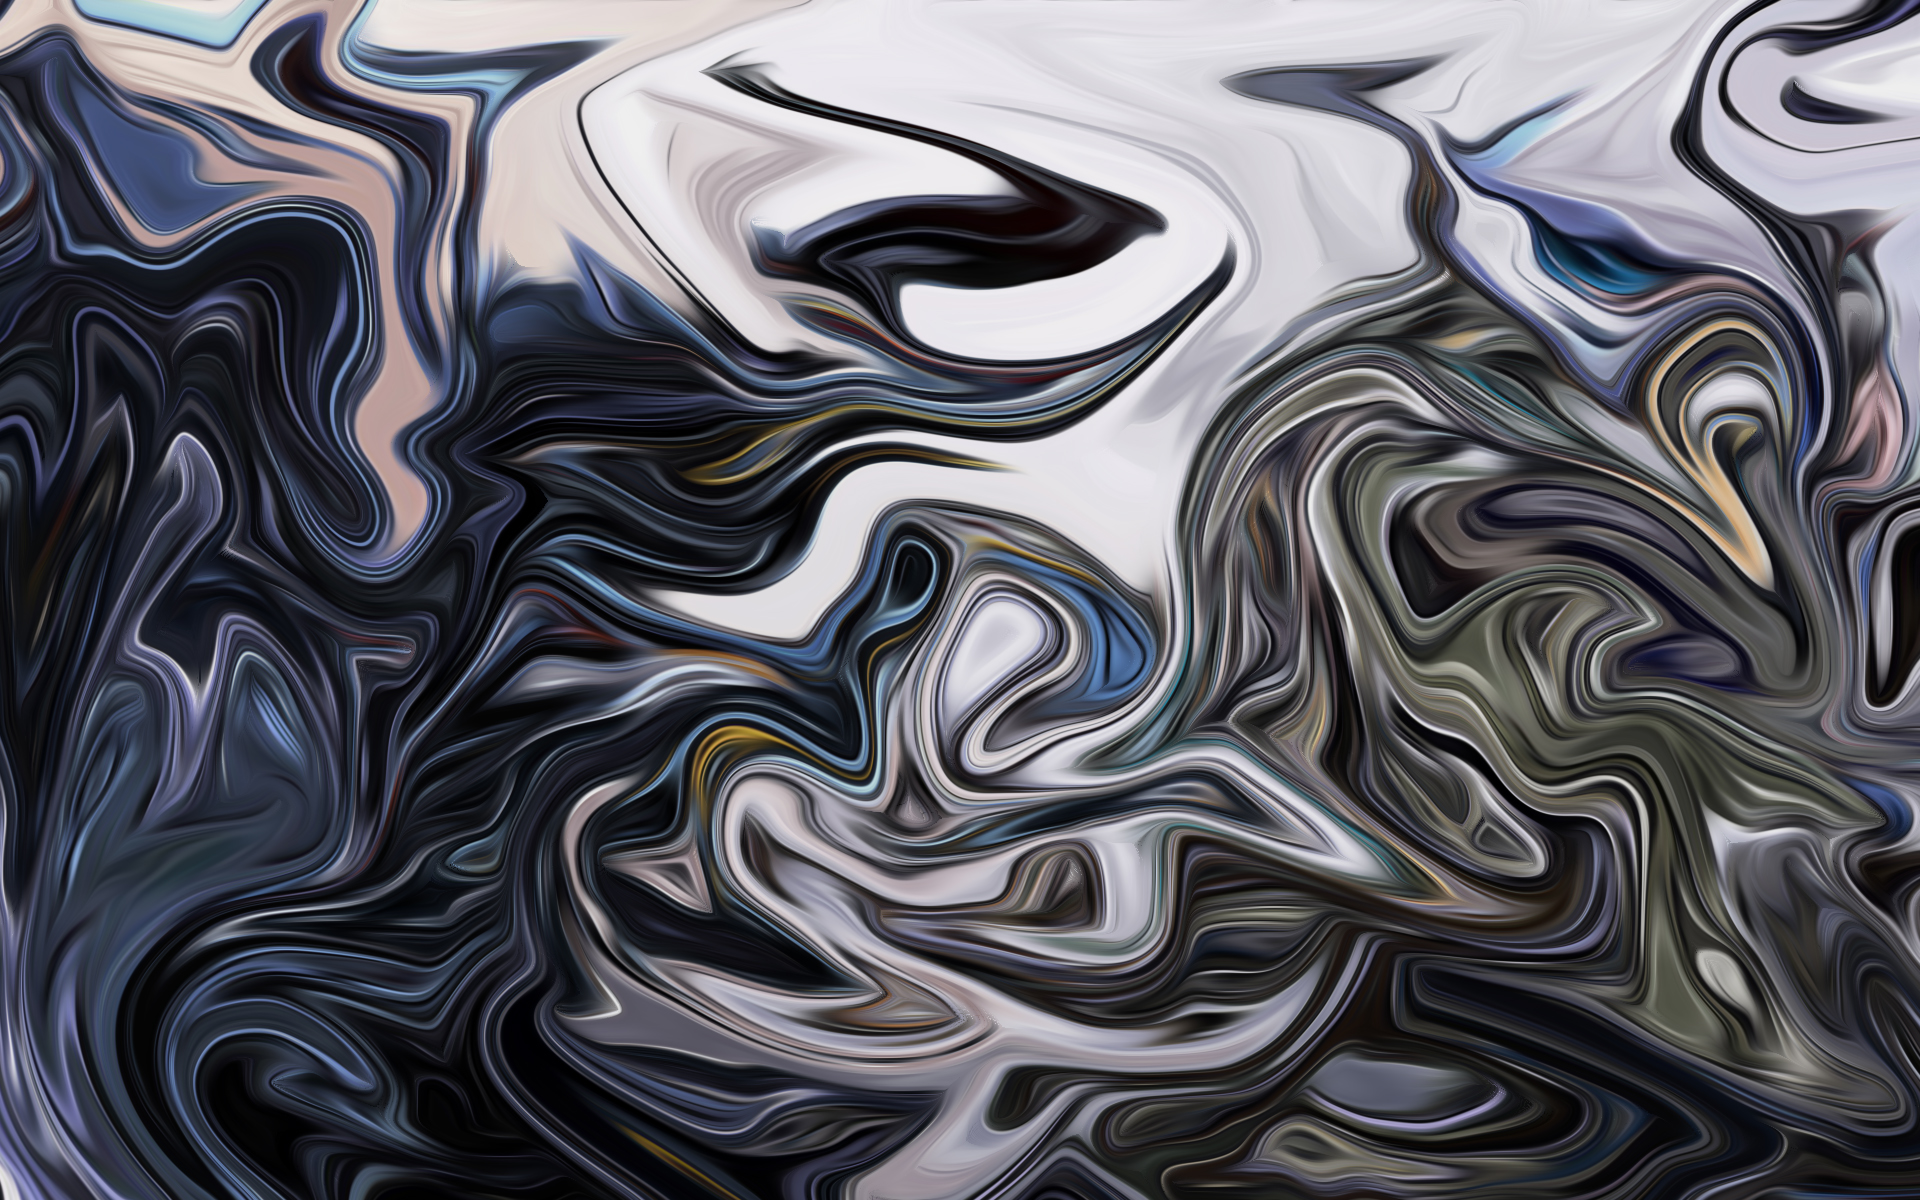 Abstract Shapes Fluid Liquid Artwork Digital Art Paint Brushes Neon 8 K 1920x1200